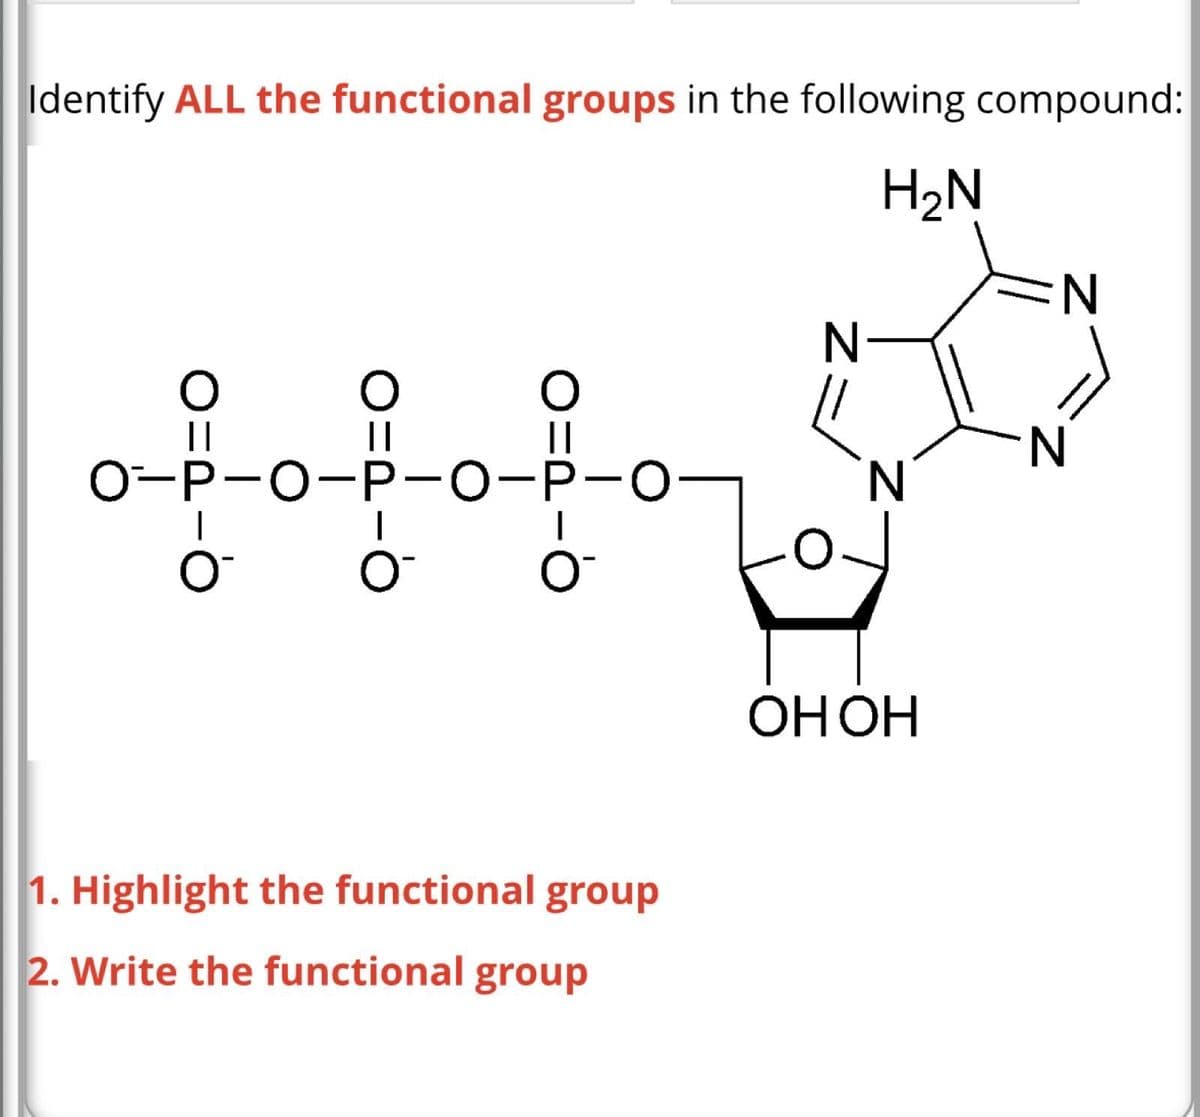 Identify ALL the functional groups in the following compound:
H₂N
O
O-P-O-P-O-P-O-
O™ O™
O
||
I
O
O
||
1. Highlight the functional group
2. Write the functional group
Z=
N
N
OH OH
N
N